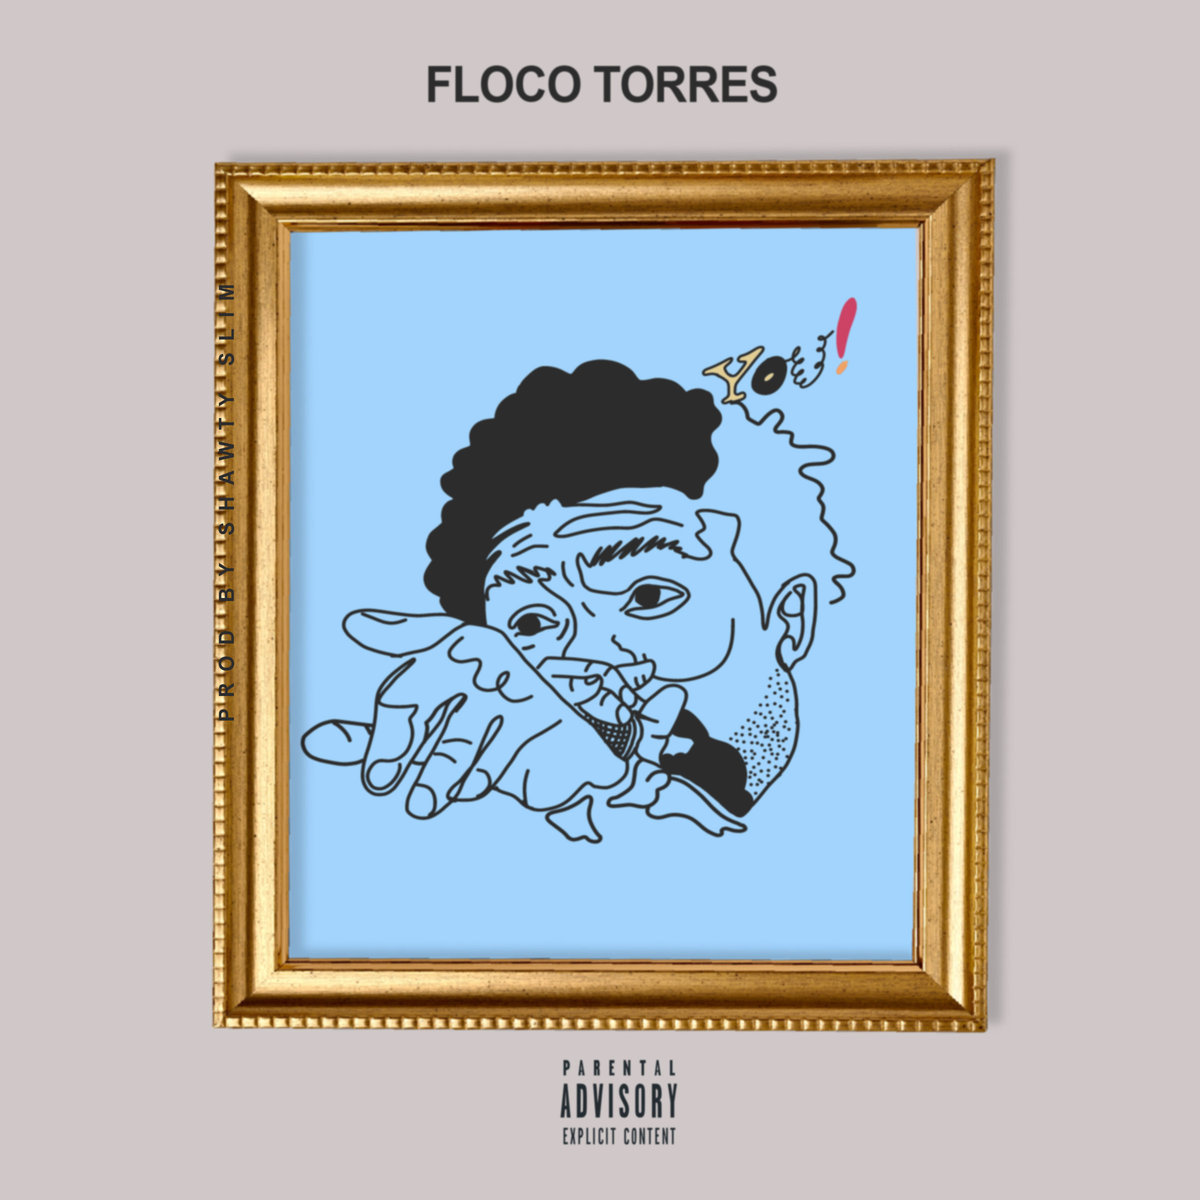 Floco Torres Drops “You!” (Prod. By Shawty Slim)